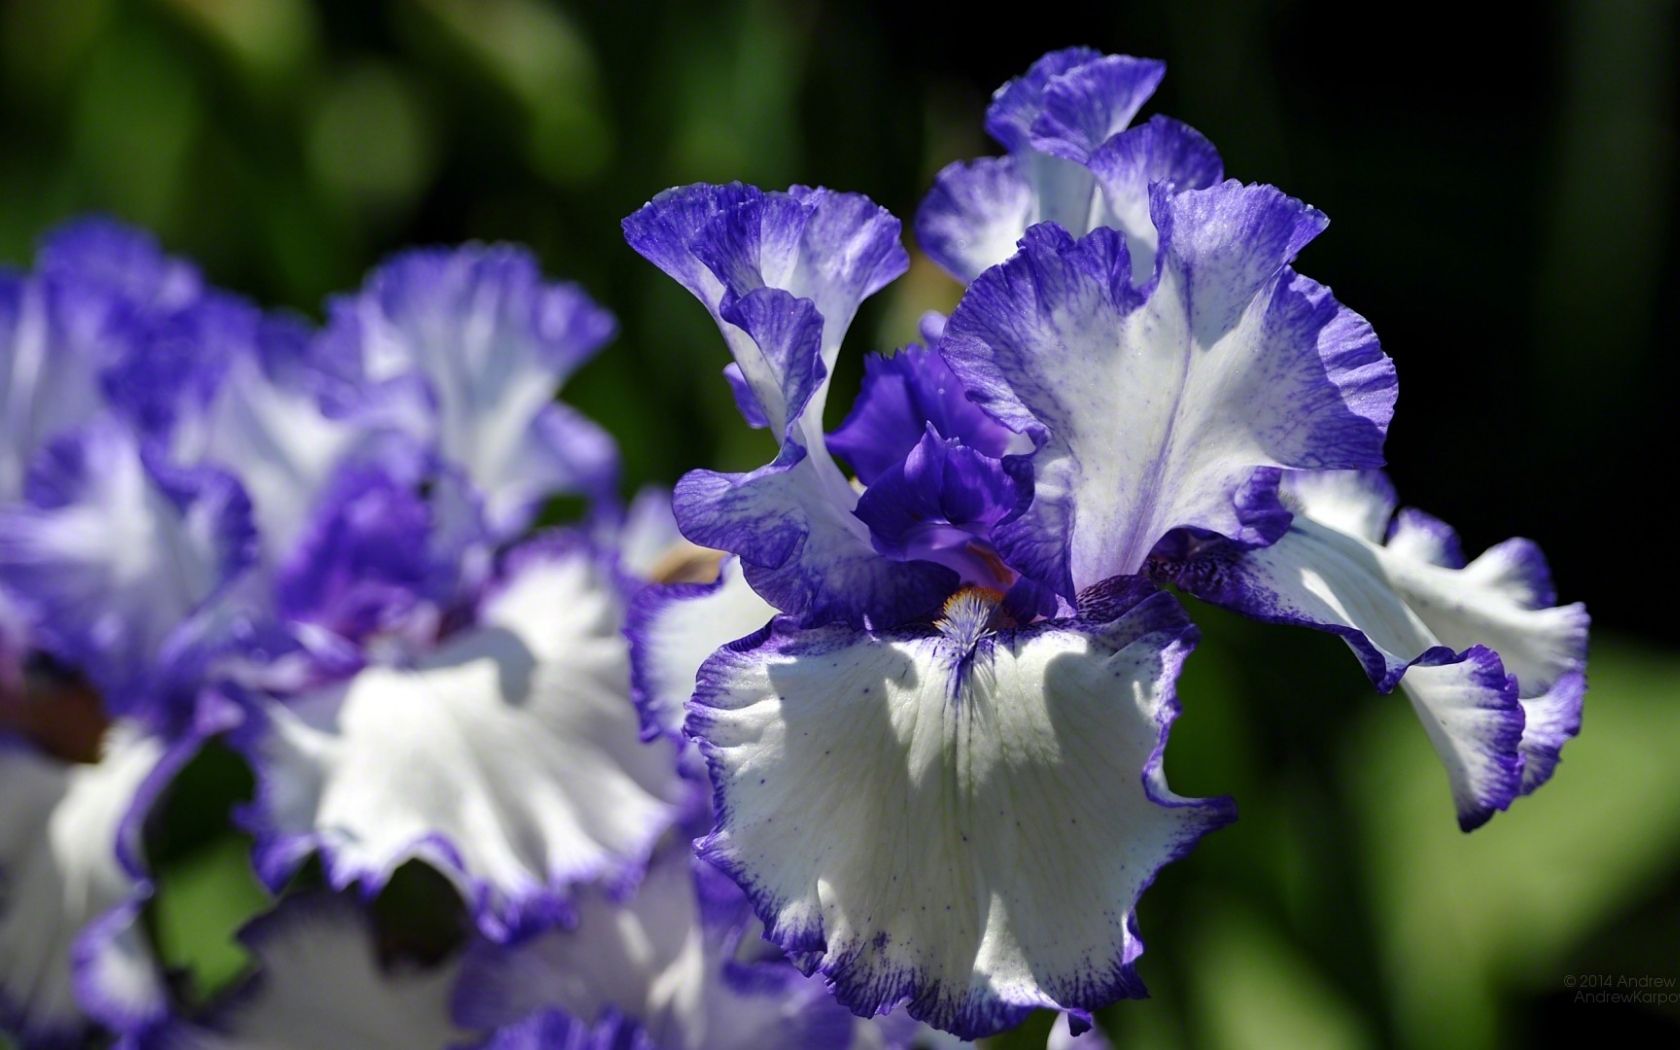 Free download 1920 x 1080 Beautiful irises flowers wallpaper